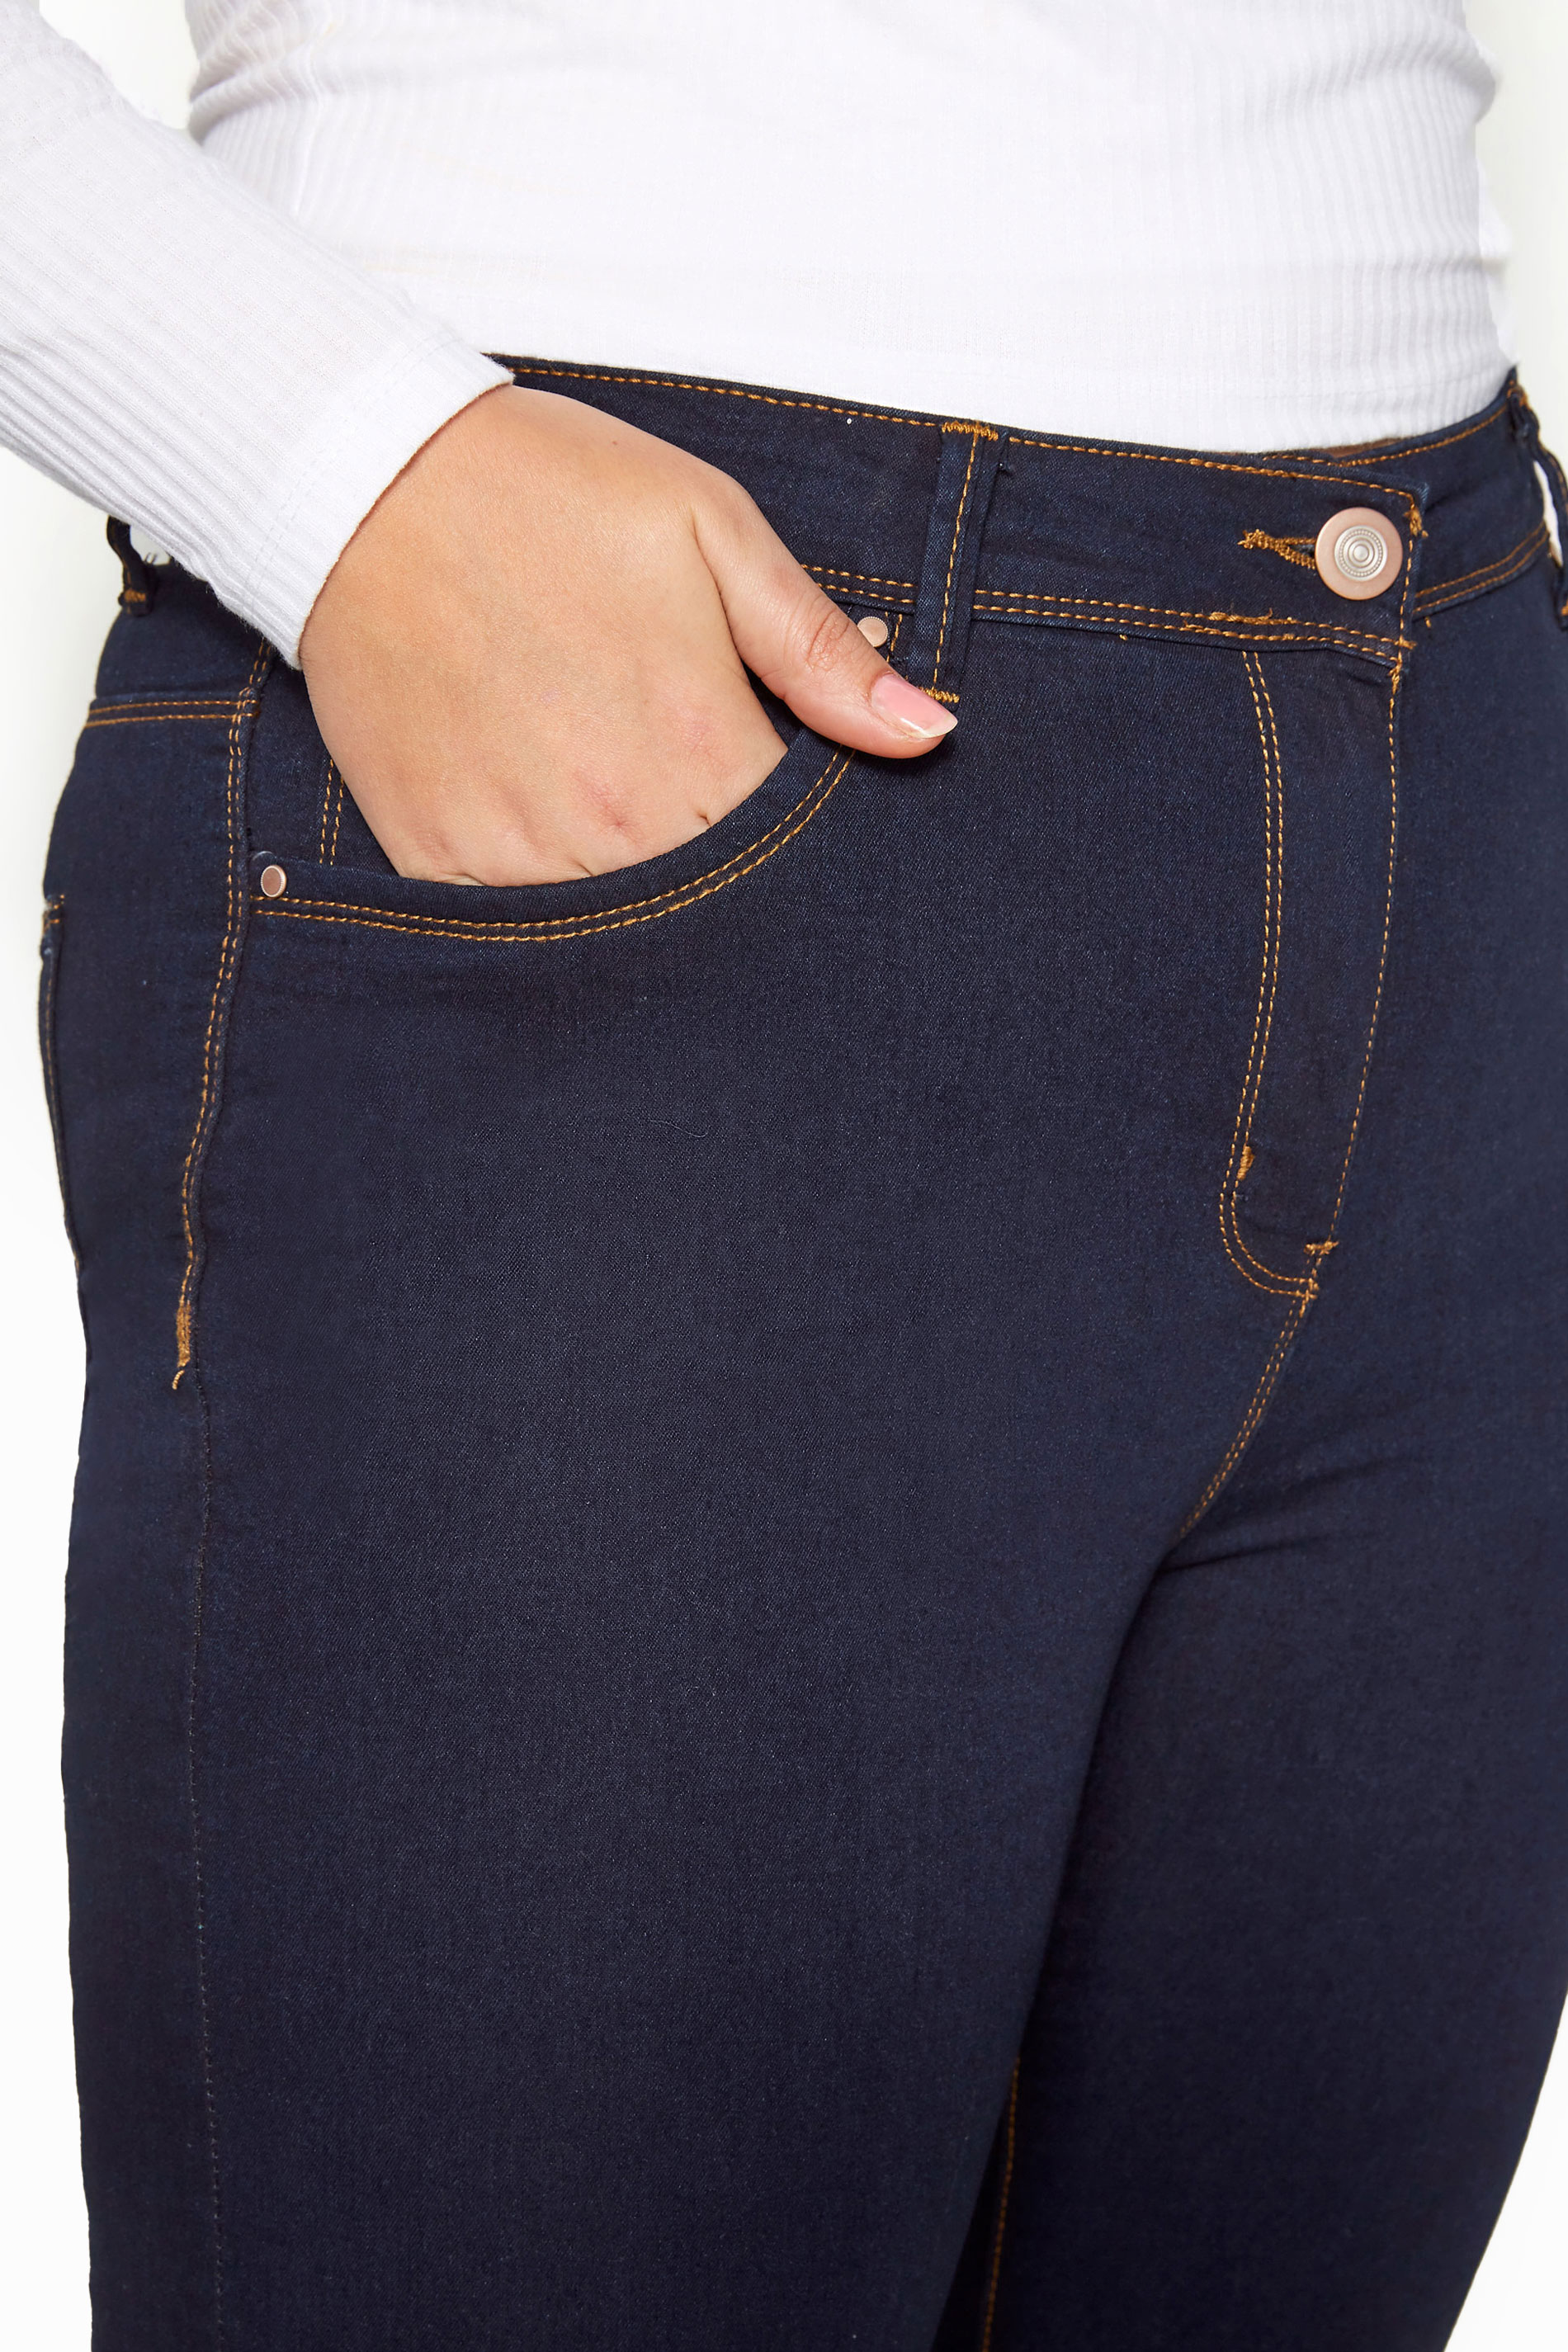 Indigo Blue Skinny AVA Jeans Plus Size 16 to 32 | Yours Clothing